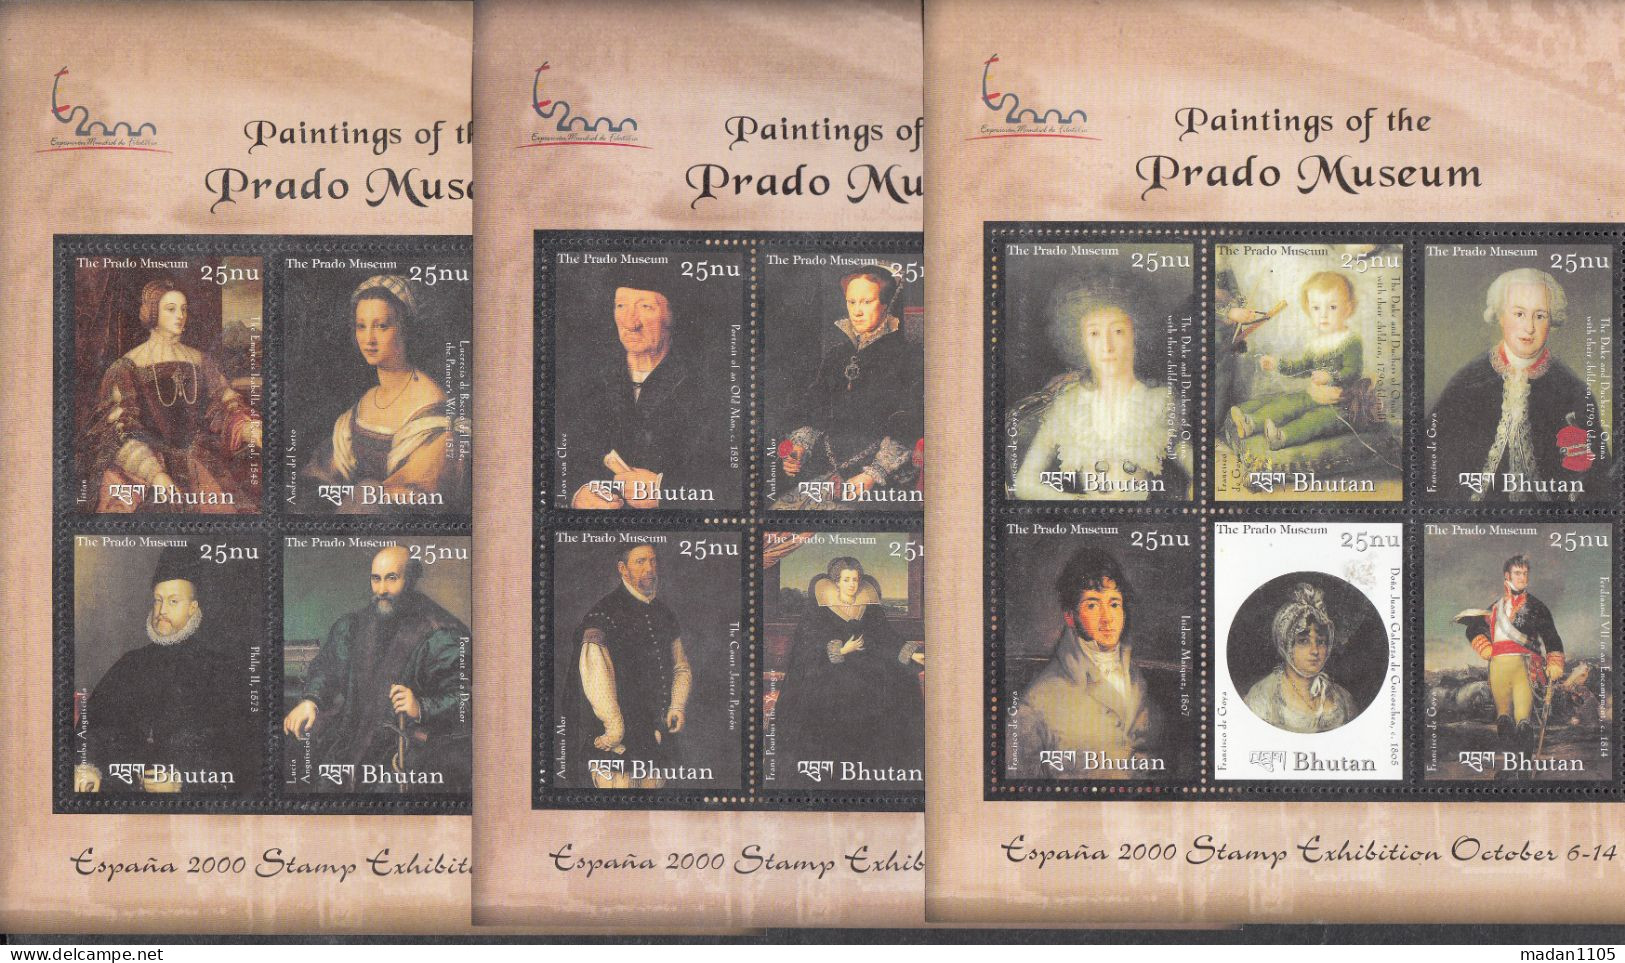 BHUTAN, 2000, International Stamp Exhibition "Espana 2000" - Madrid, Spain - Prado Museum Exhibits,  MS, MNH, (**) - Bhutan